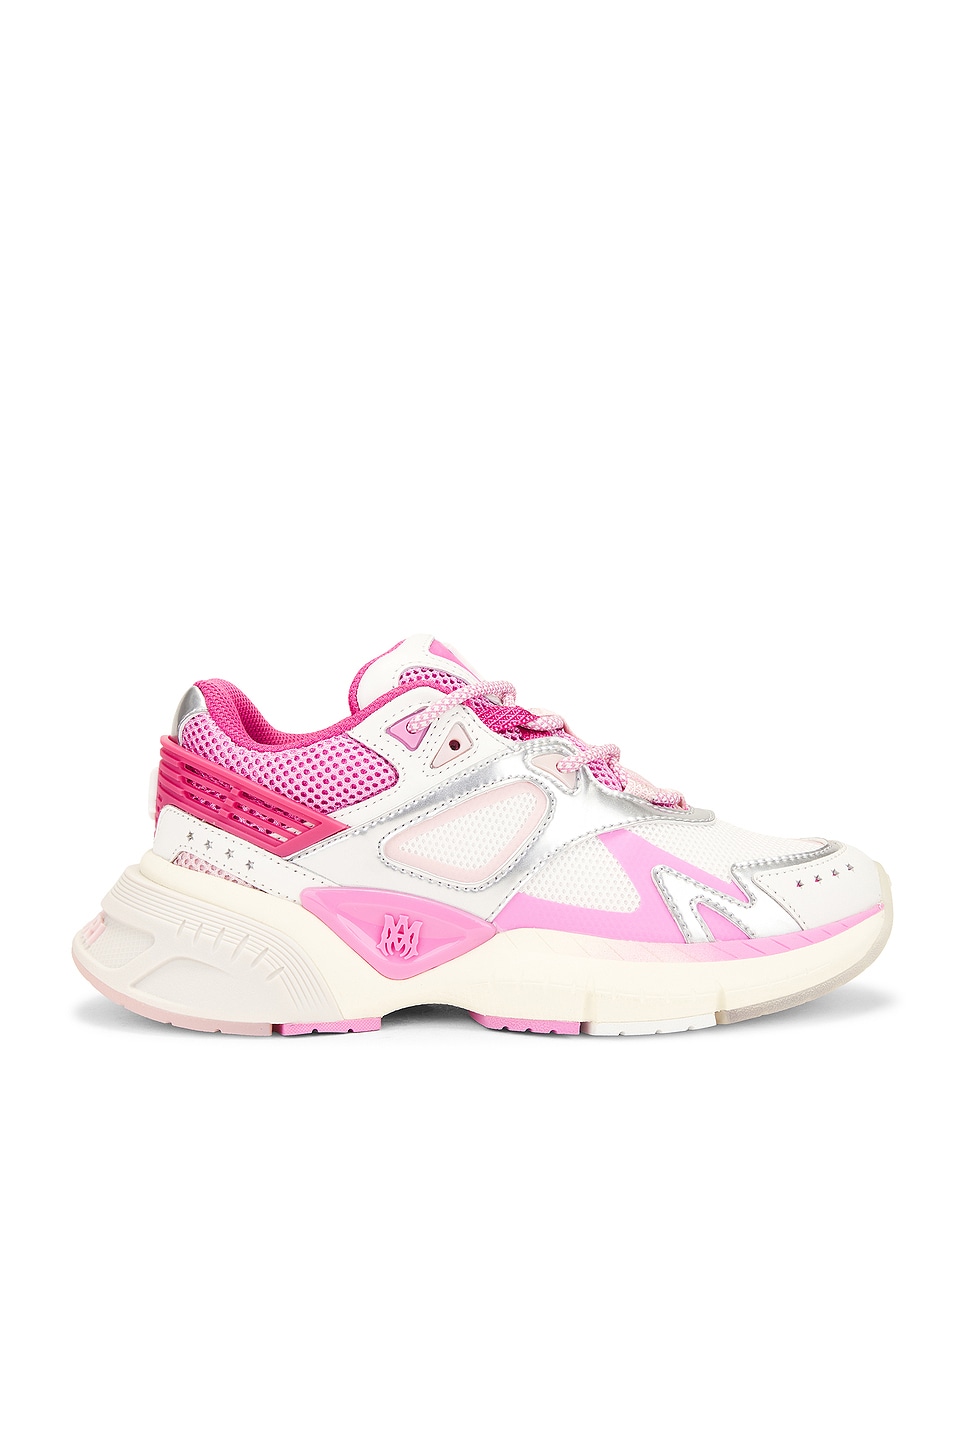 Image 1 of Amiri Ma Runner Sneaker in Fuschia Pink, White, & Silver